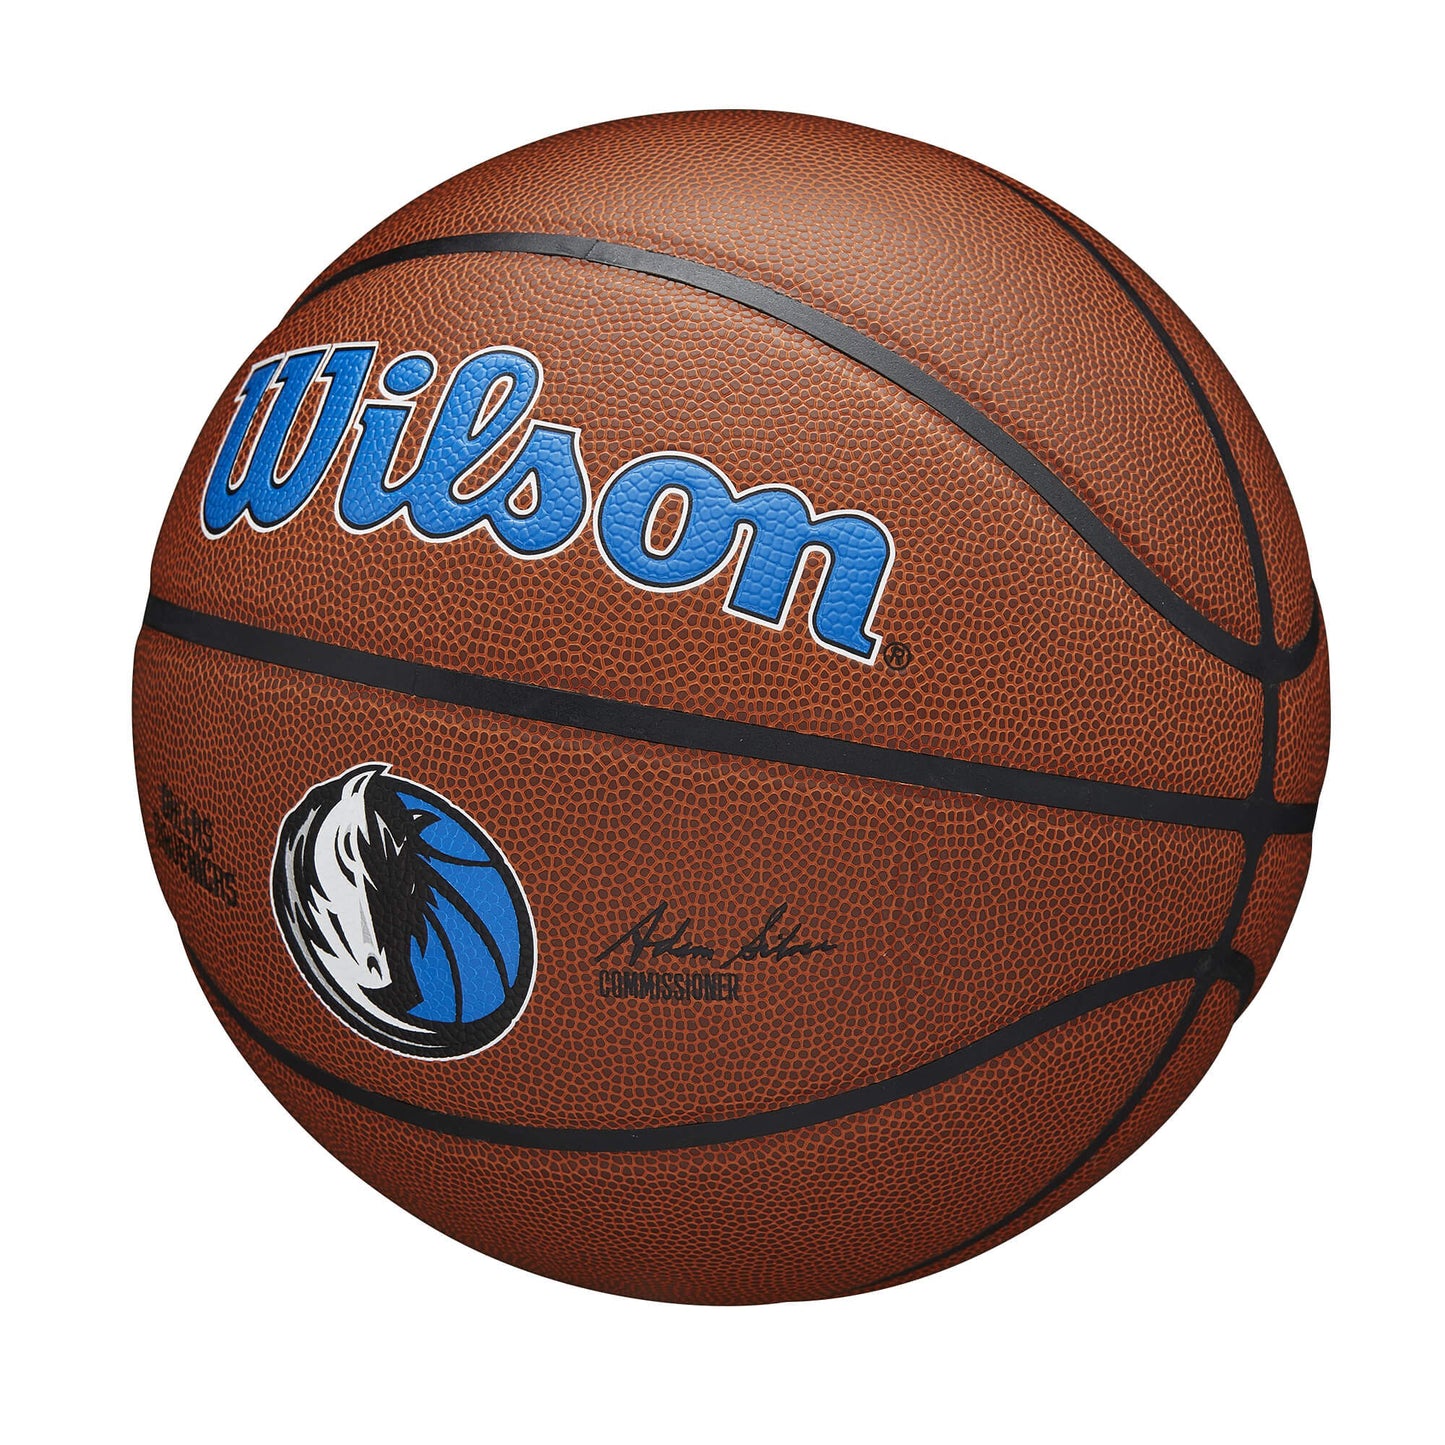 Wilson NBA Team Alliance Composite Basketball Dallas Mavericks (sz. 7)